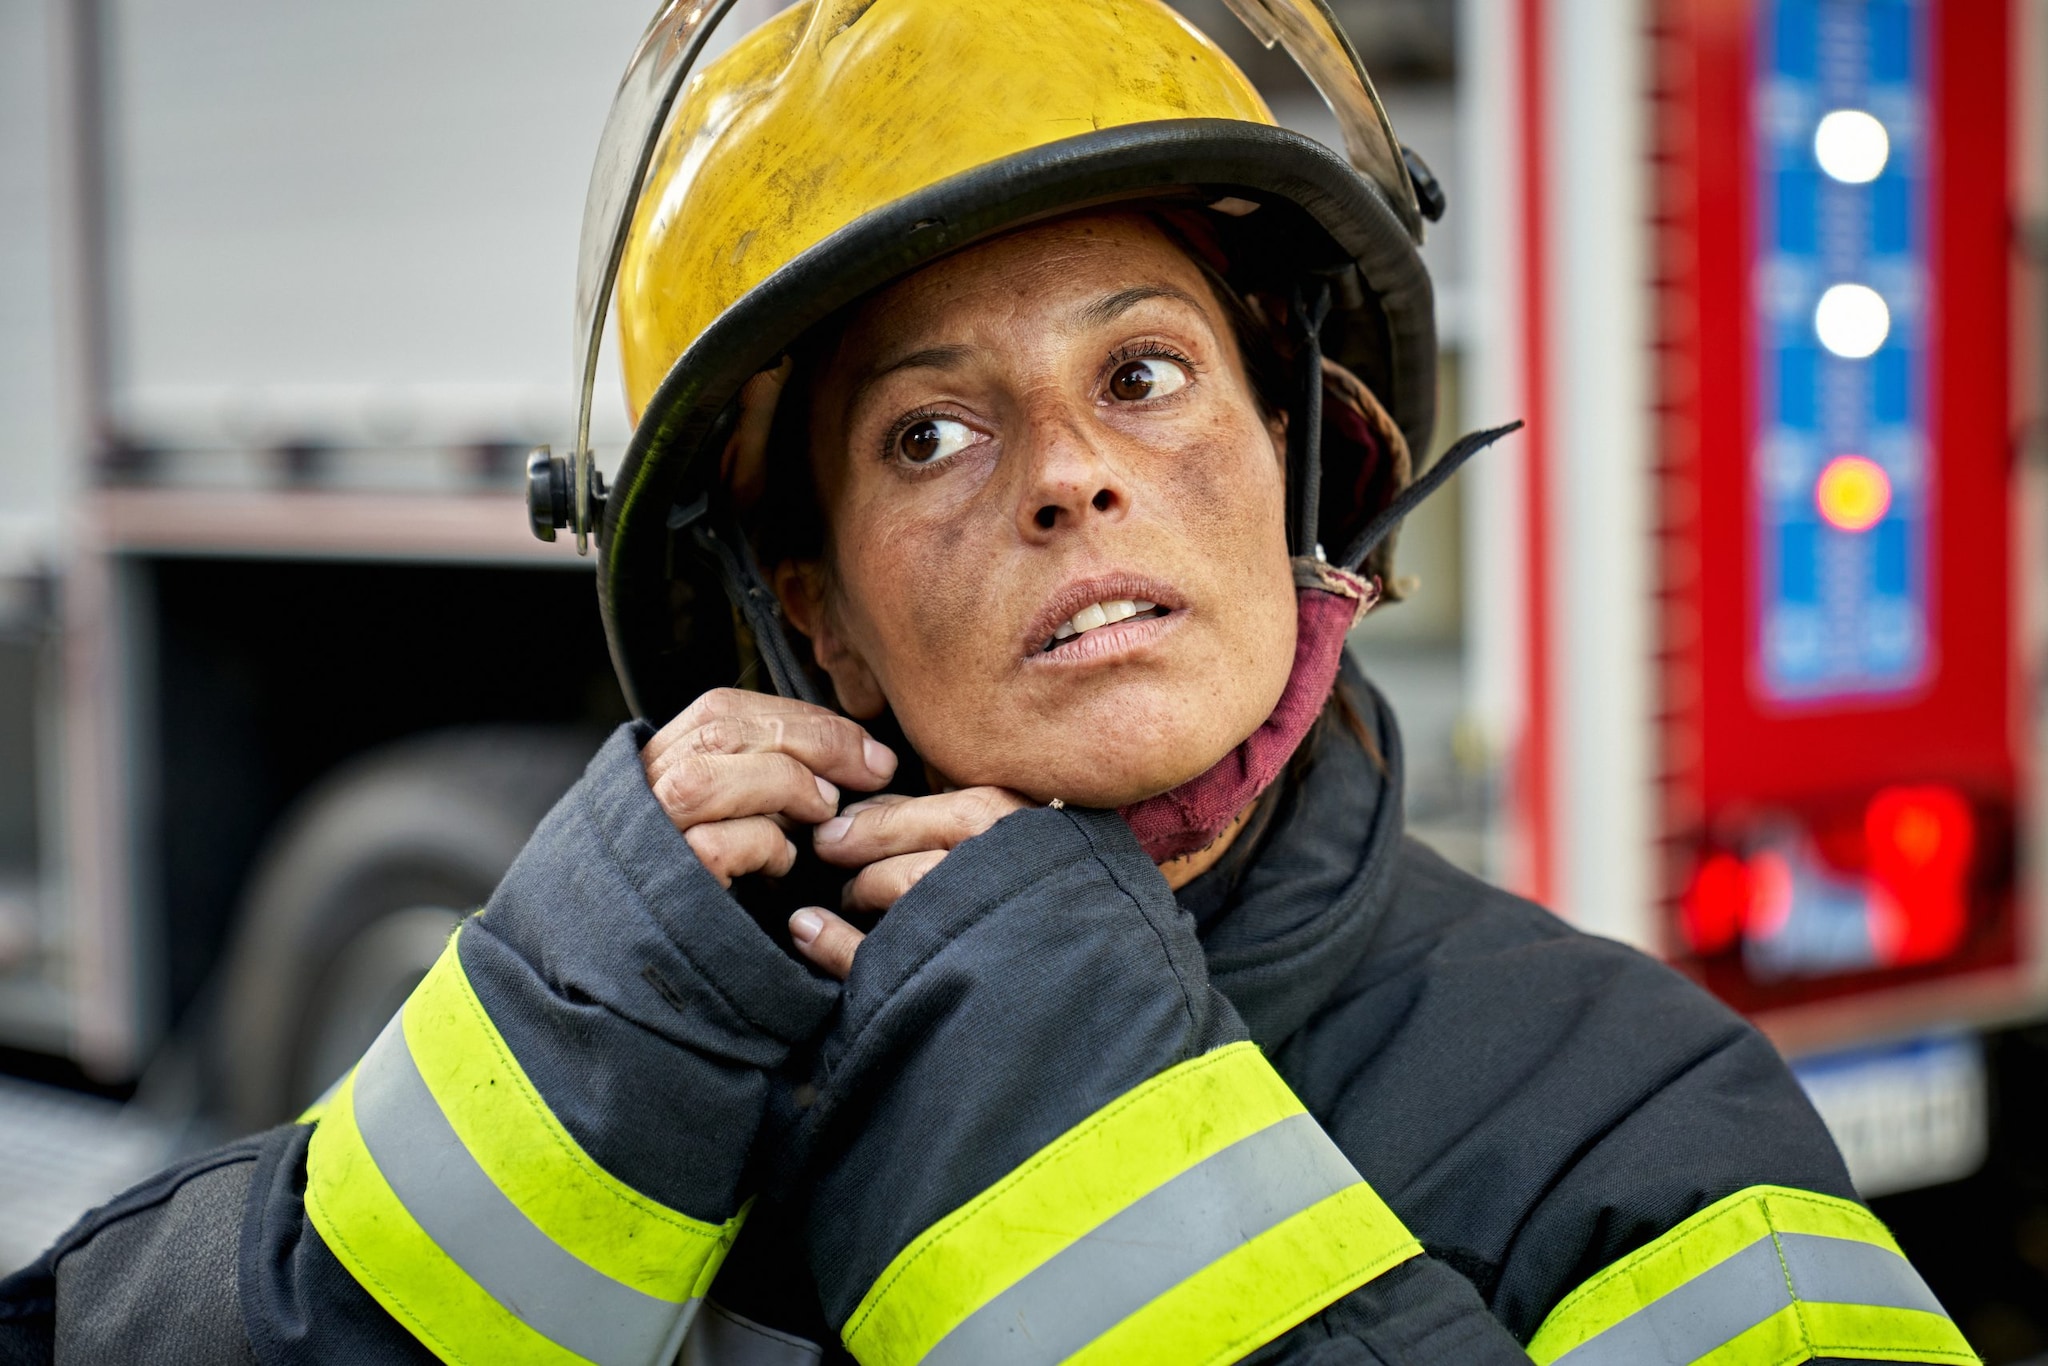 decorative: female firefighter